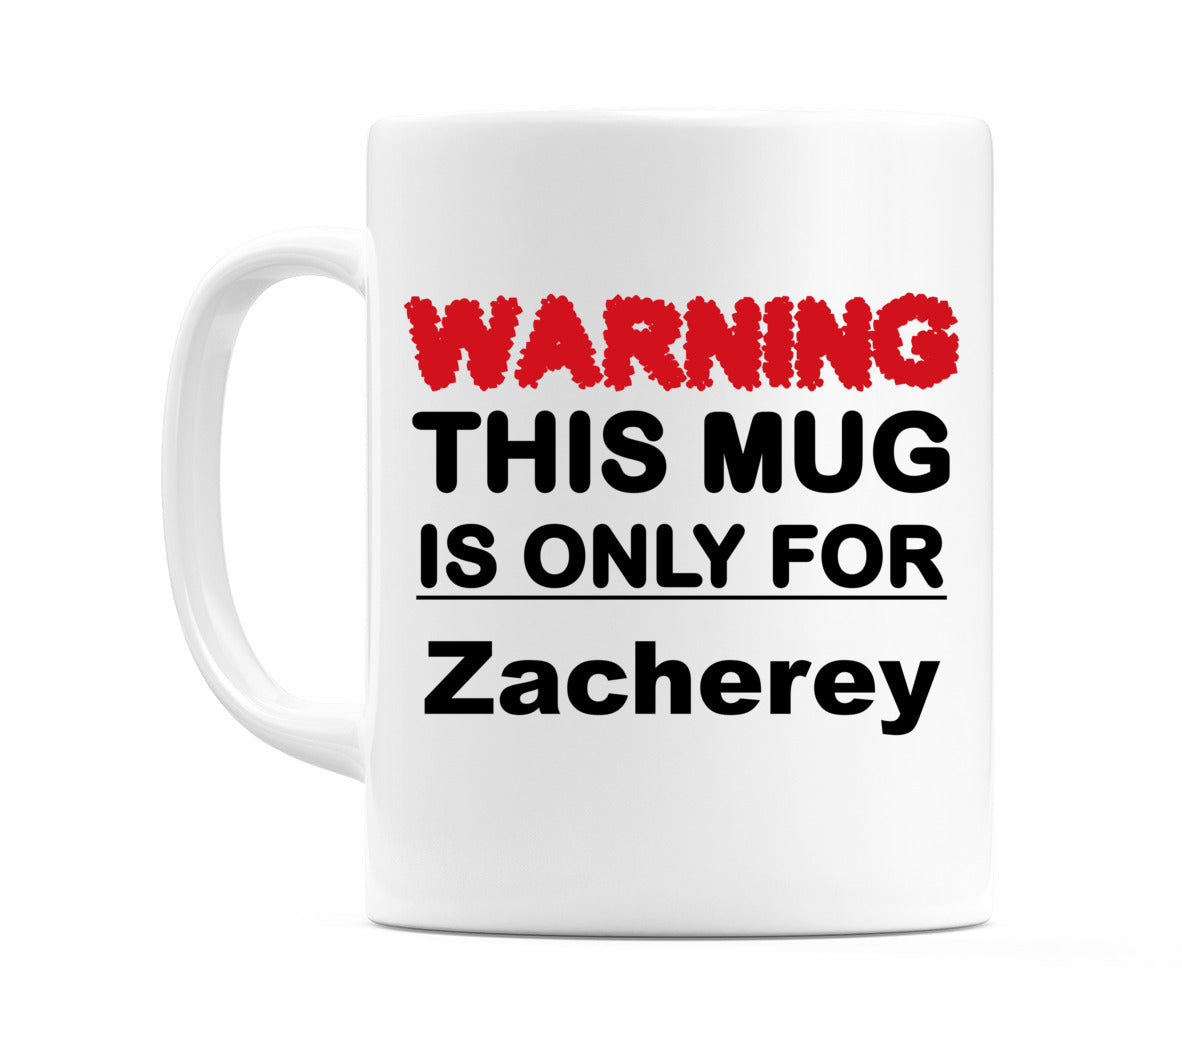 Warning This Mug is ONLY for Zacherey Mug